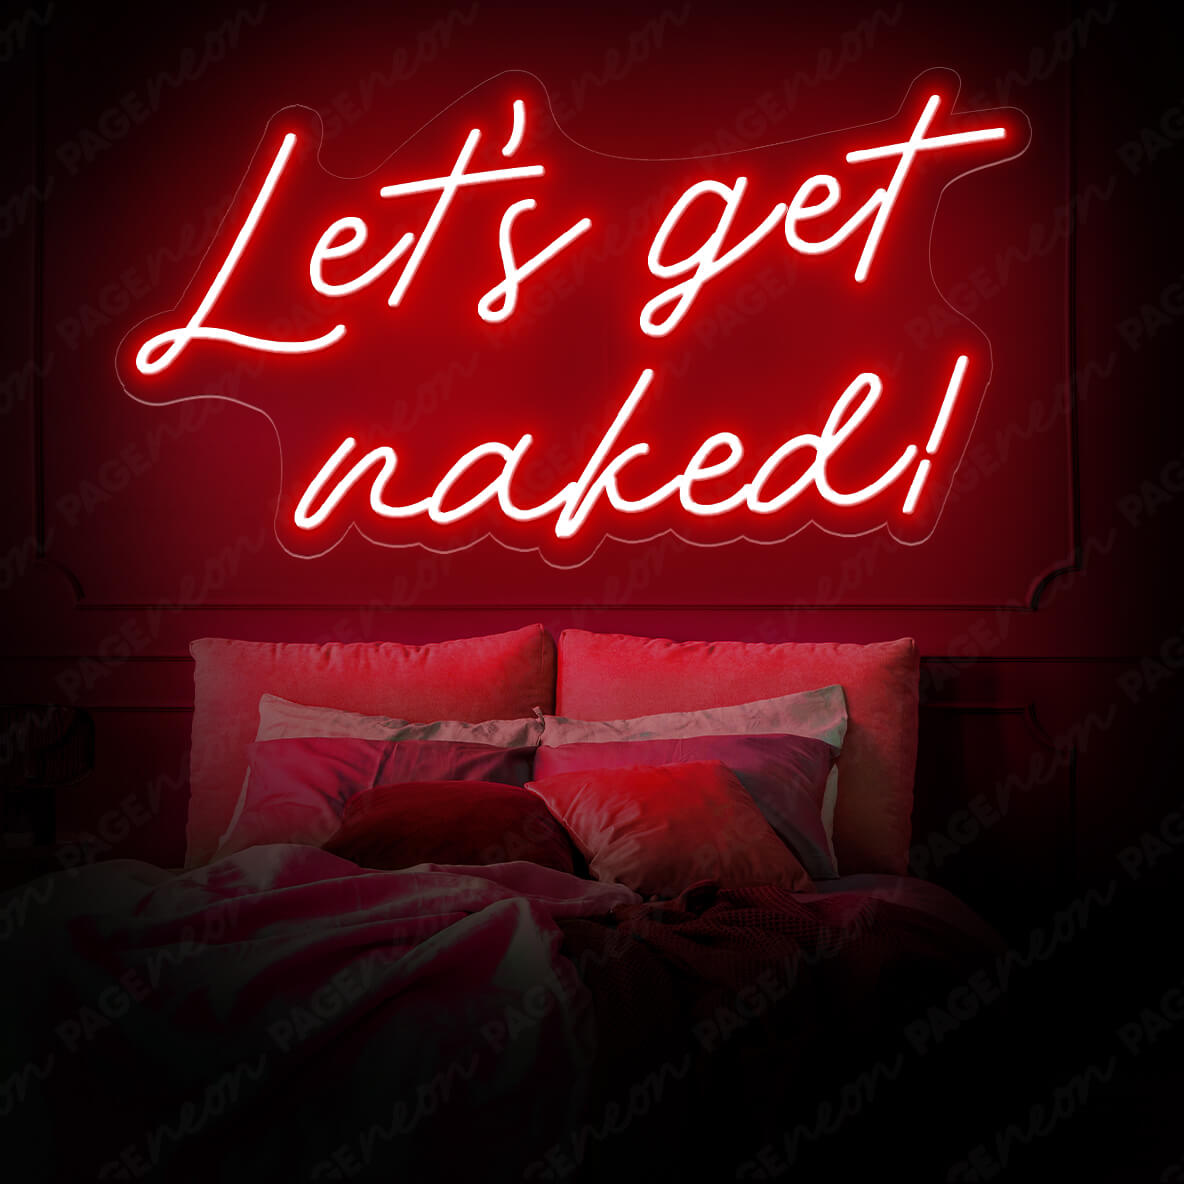 Let's Get Naked Neon Sign Man Cave Led Light Red